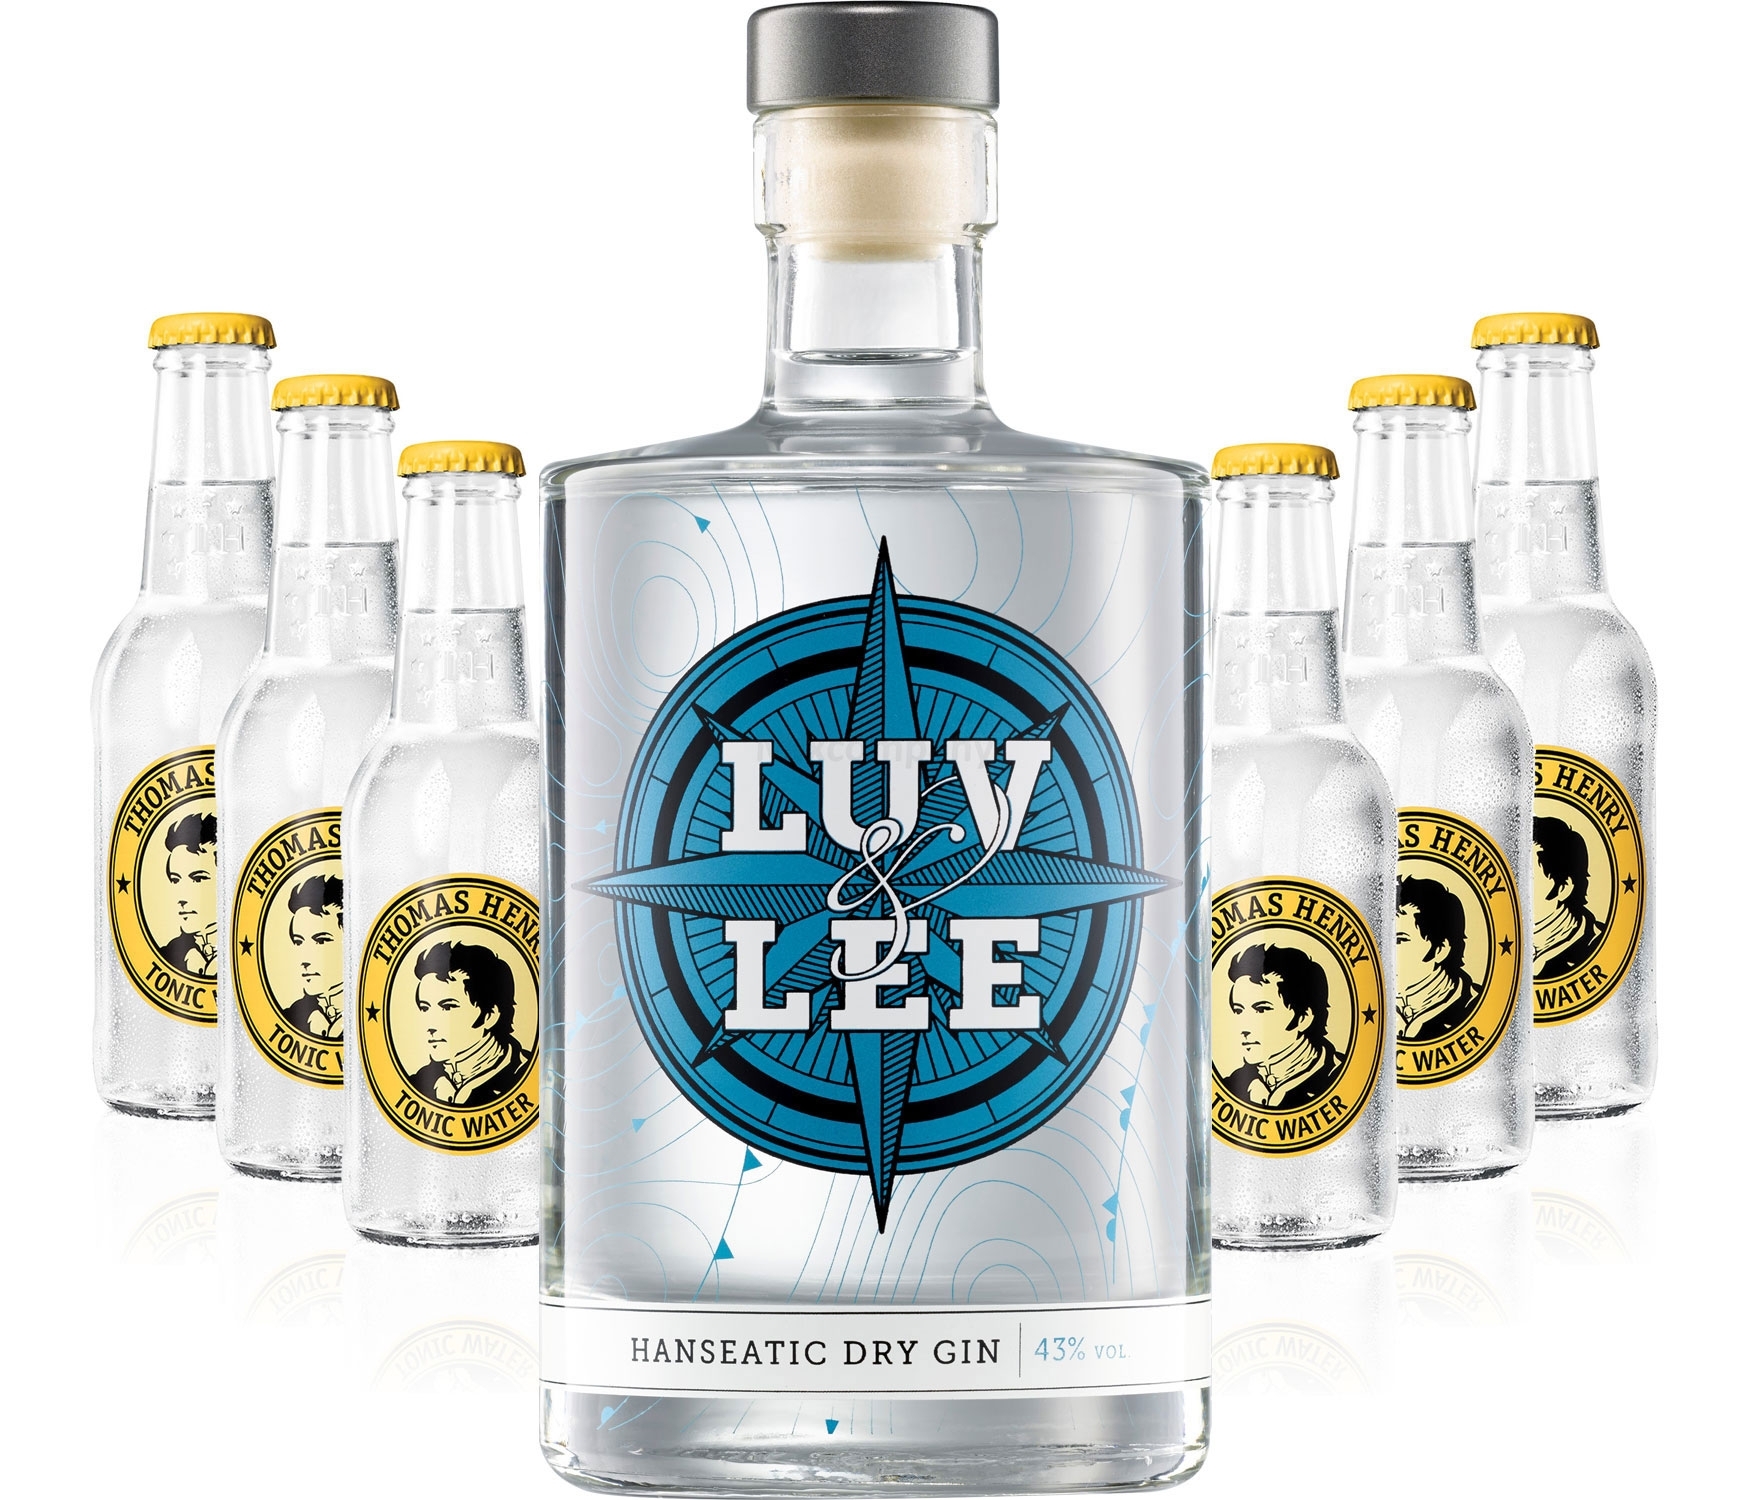 Luv & Lee Hanseatic Dry Gin Tonic Set - Luv & Lee Gin 0,5l (43% Vol) + 6x Thomas Henry Tonic Water 200ml inkl. Pfand MEHRWEG